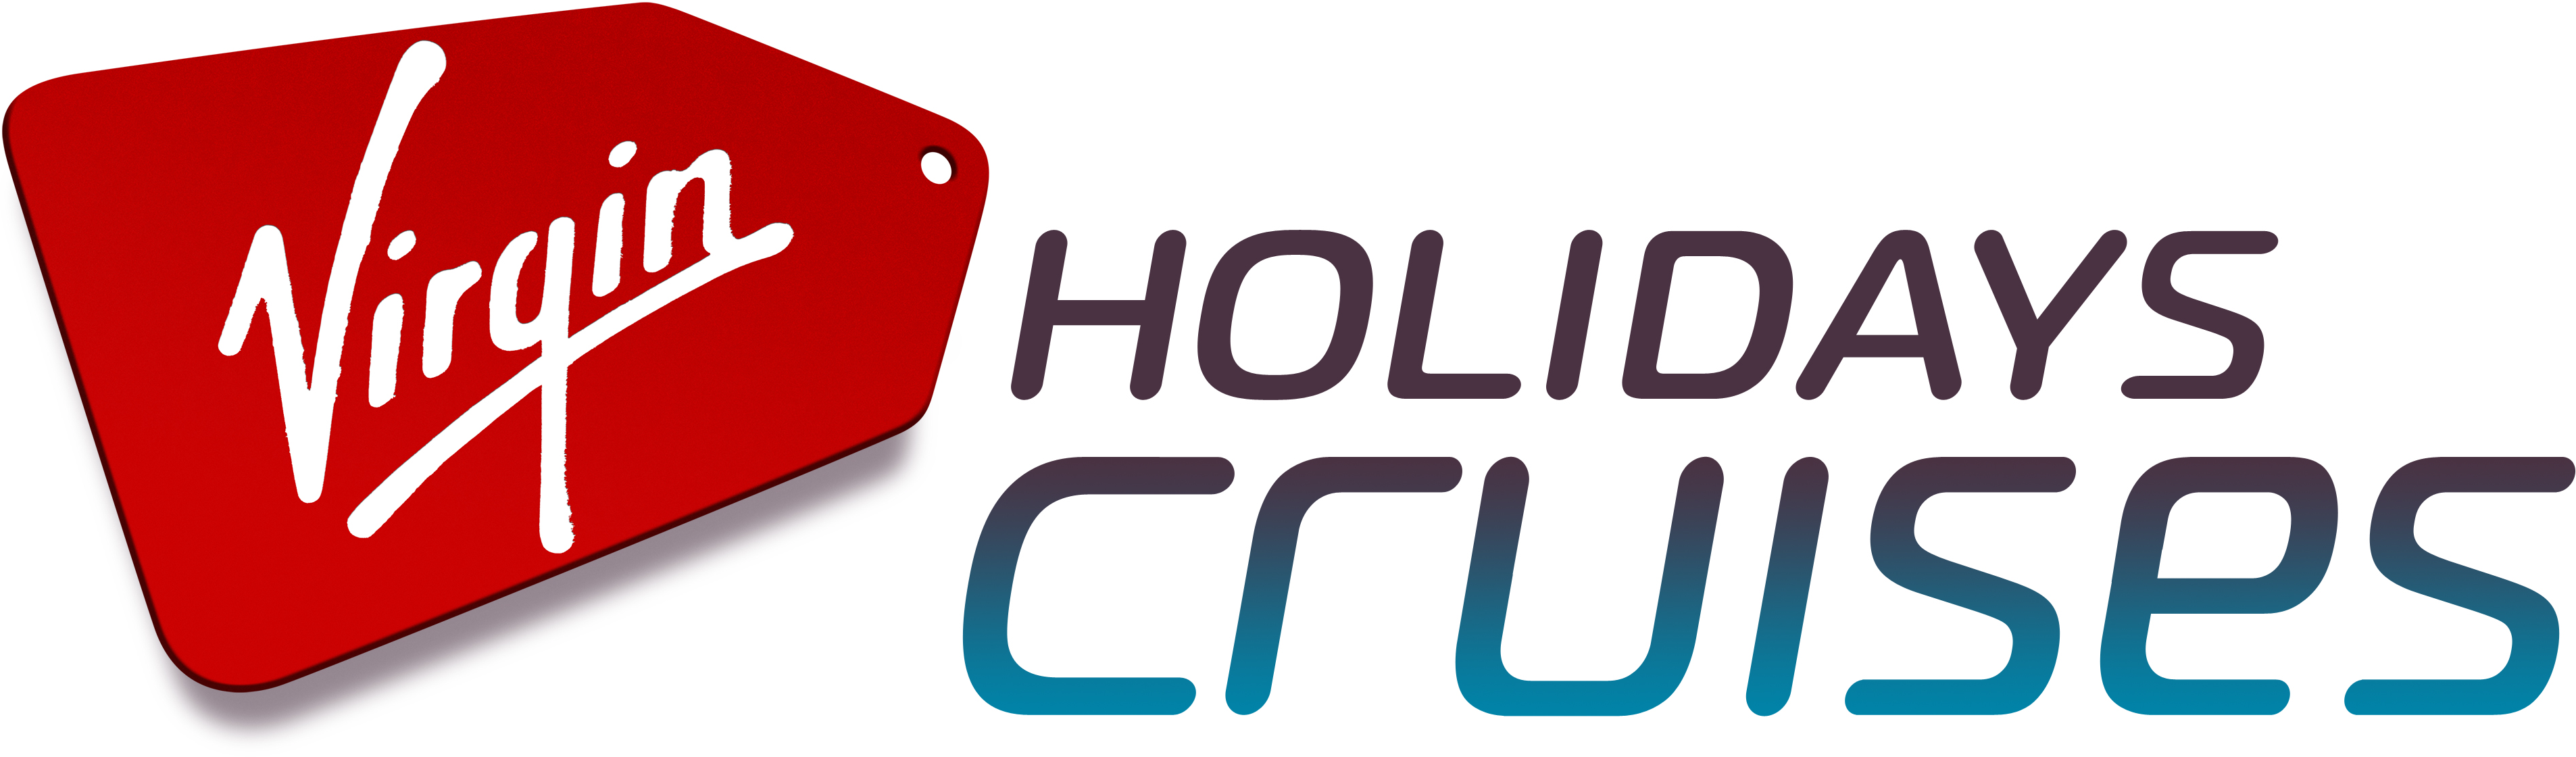 Virgin Holidays Cruises Logopedia, the logo and branding site